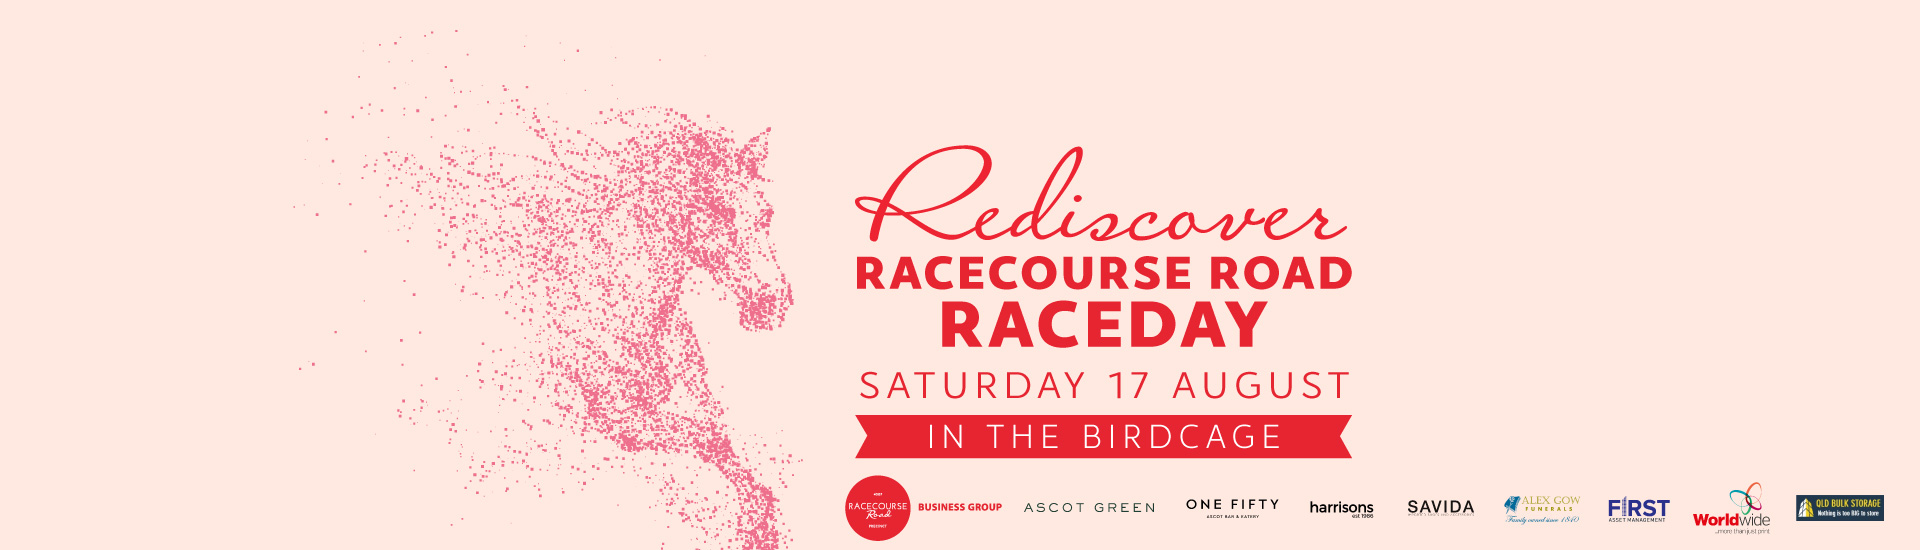 Racecourse Rd Birdcage | Brisbane Racing Club 